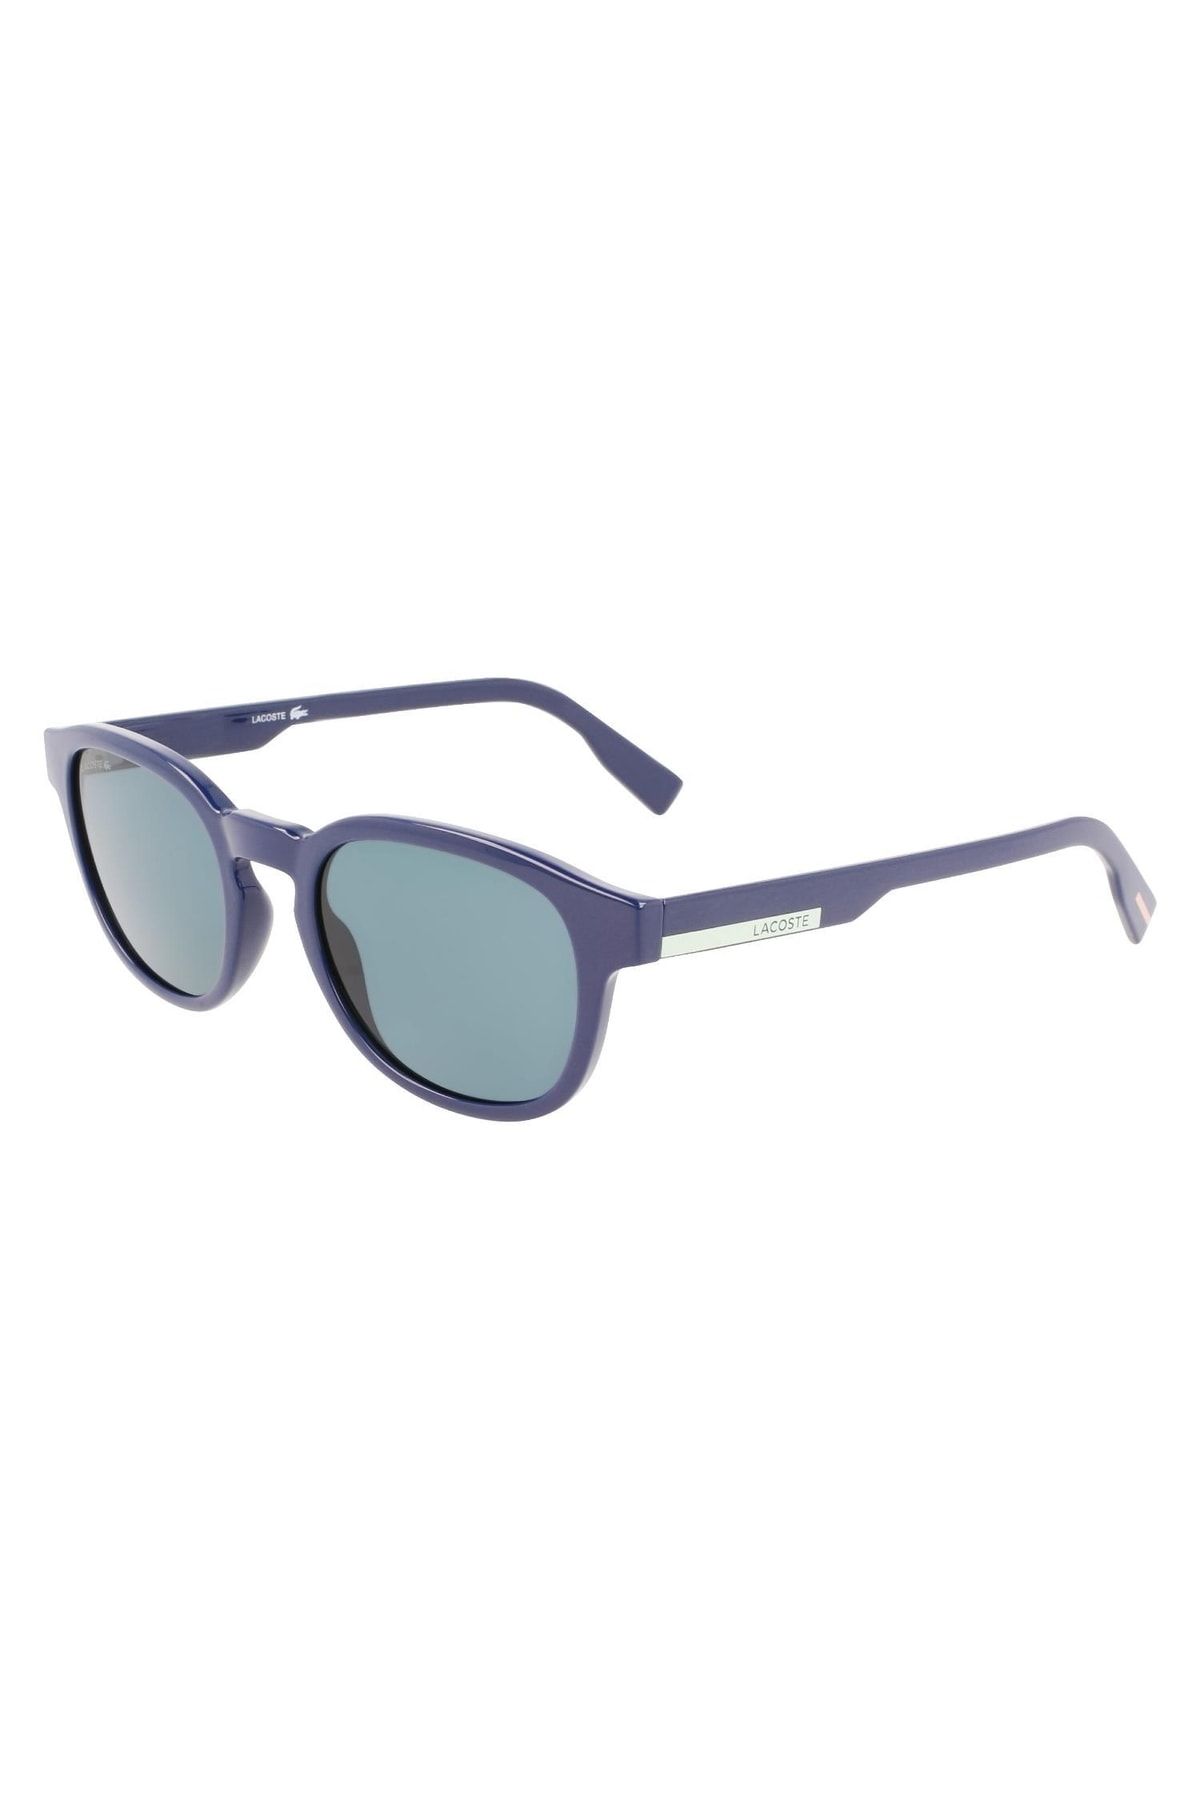 Lacoste Sunglasses L872S 421 Matte Blue Square Frames w Green Lenses  57-17-145 | Blue square, Square frames, Lenses